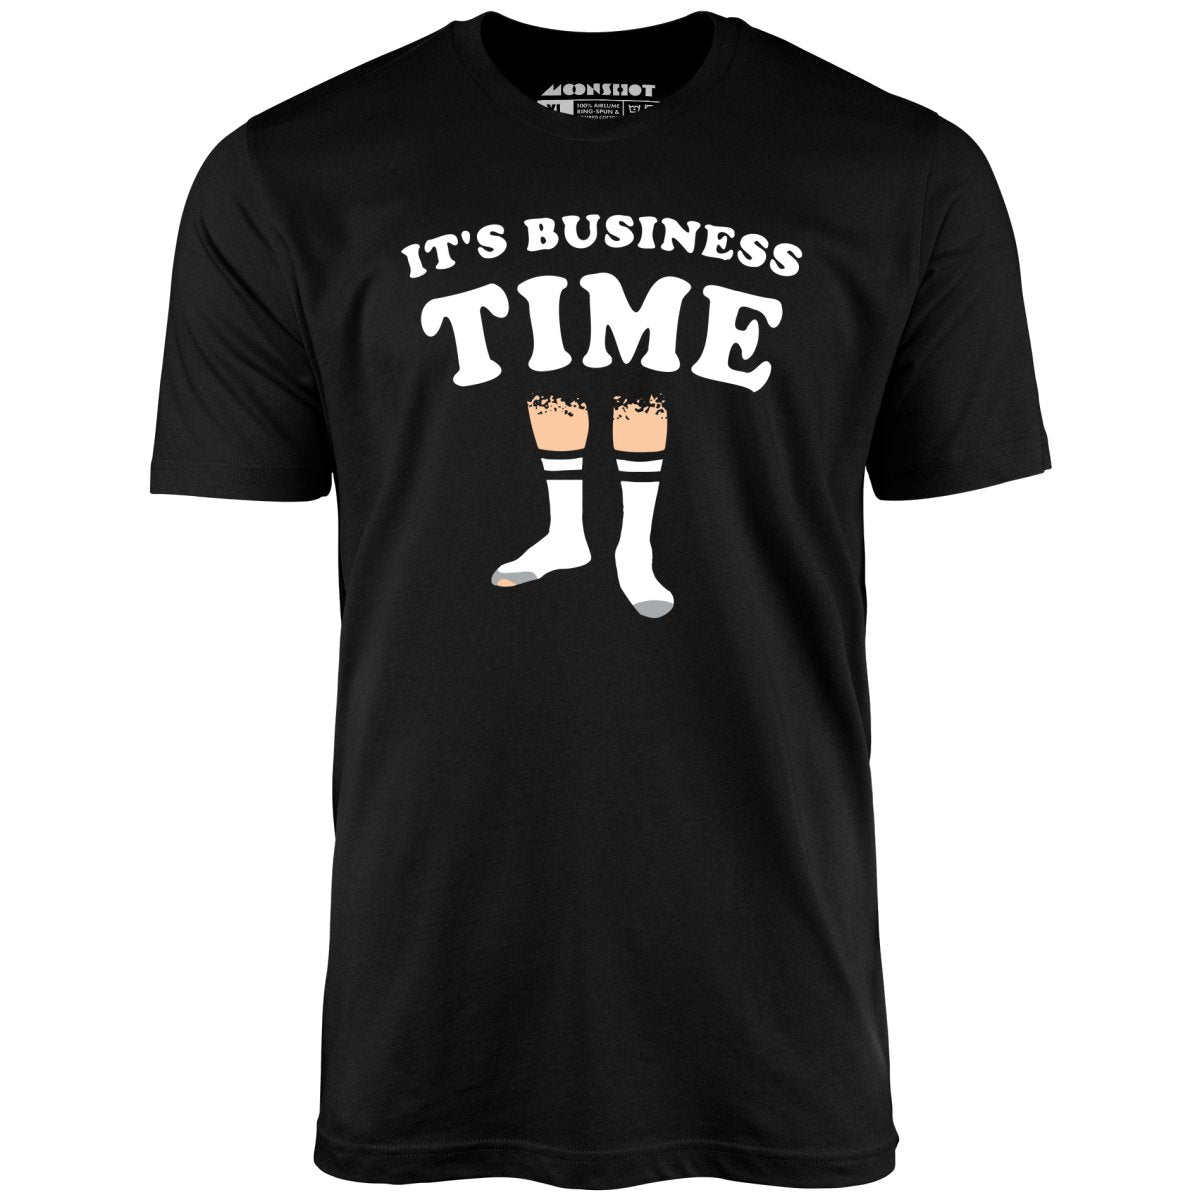 It's Business Time - Unisex T-Shirt